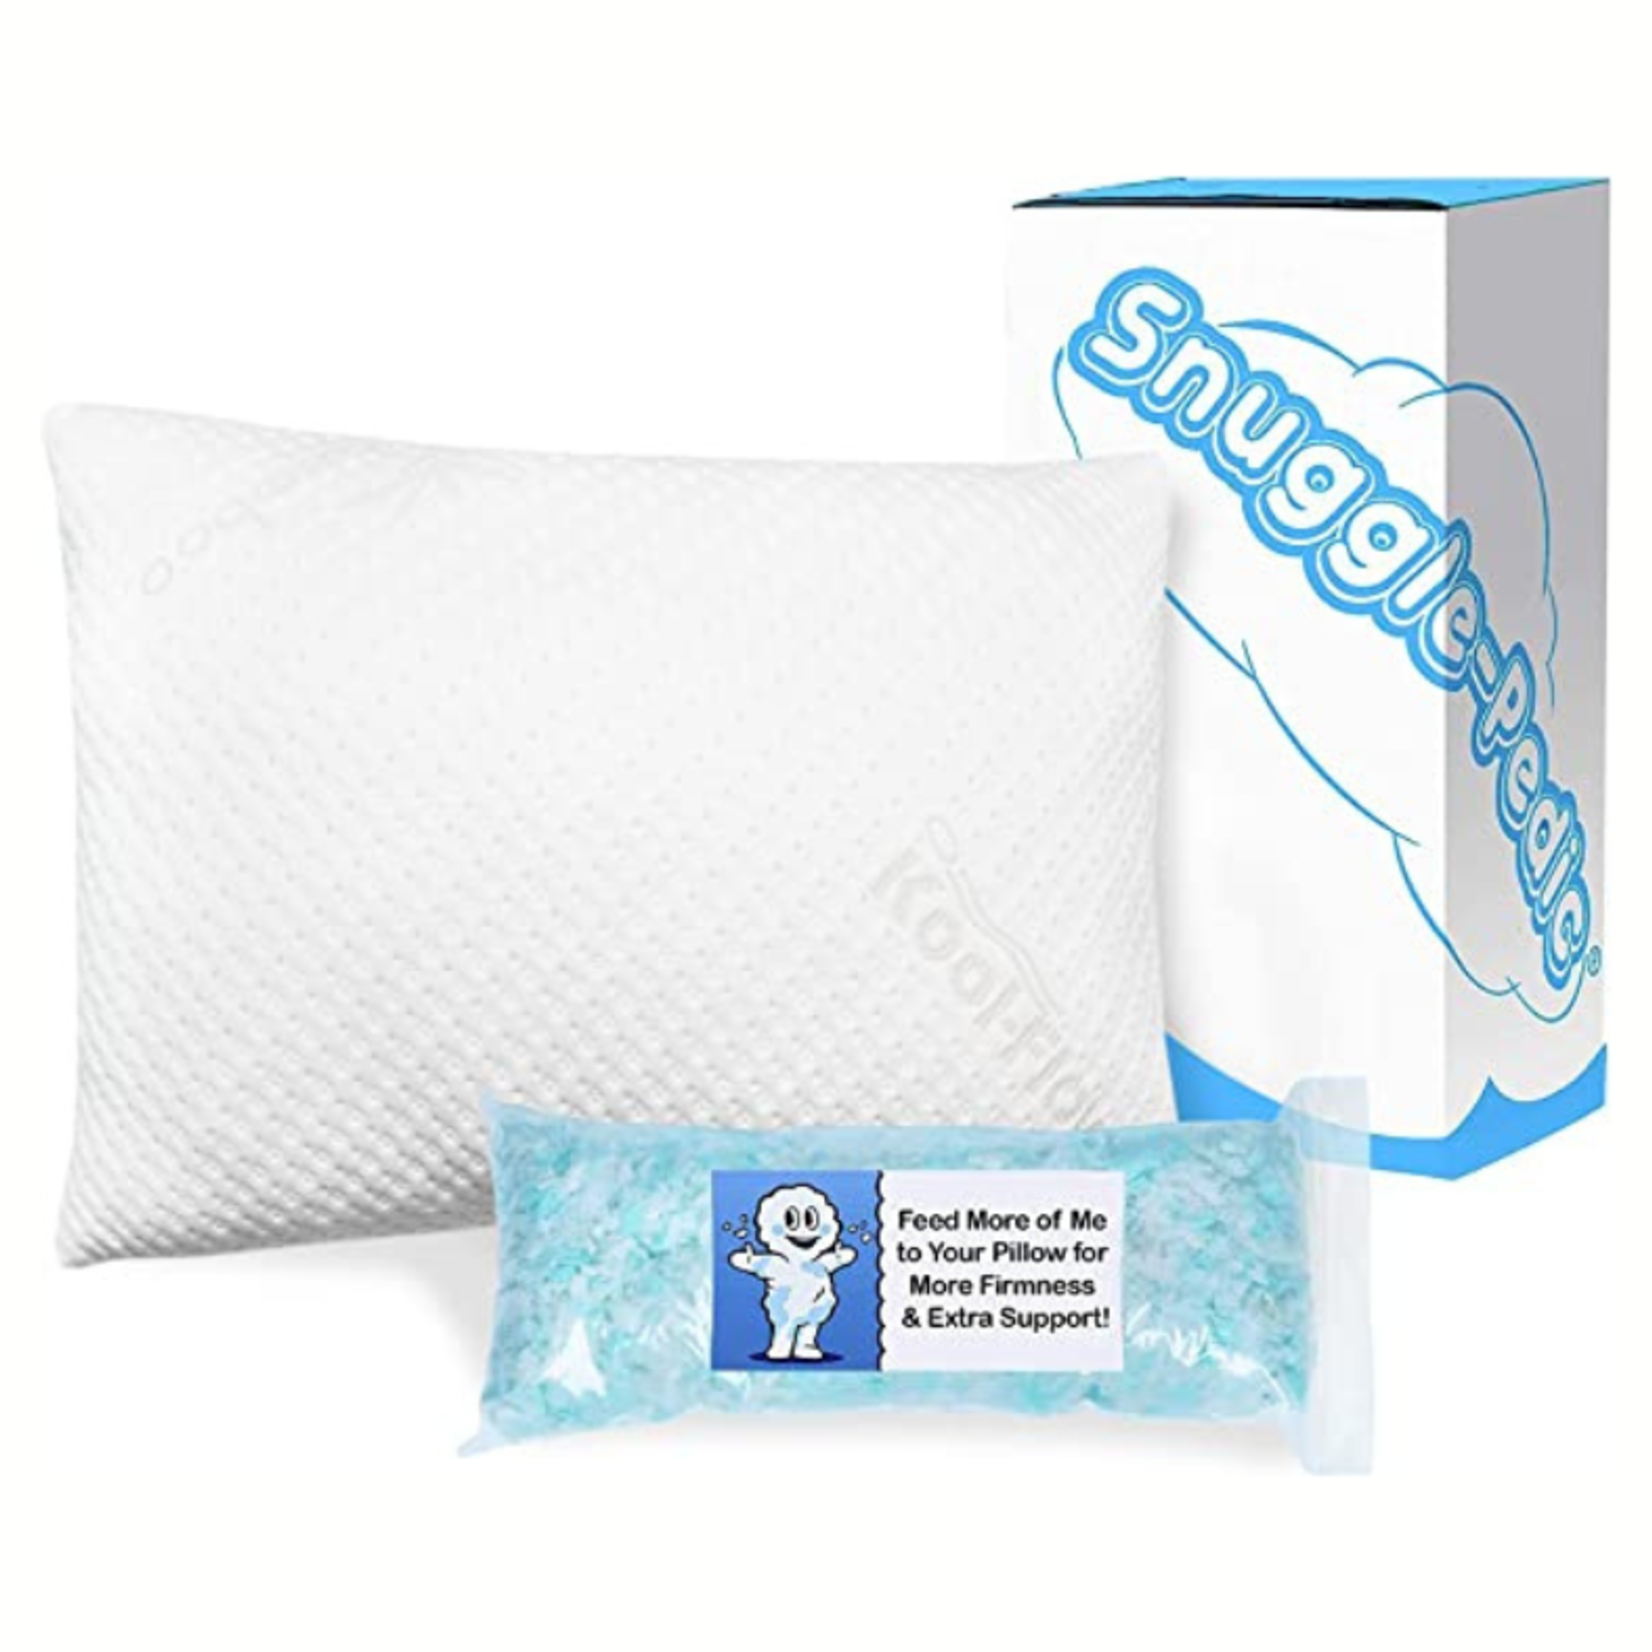 Snuggle Pedic Pillow- Shredded Memory Foam- Standard